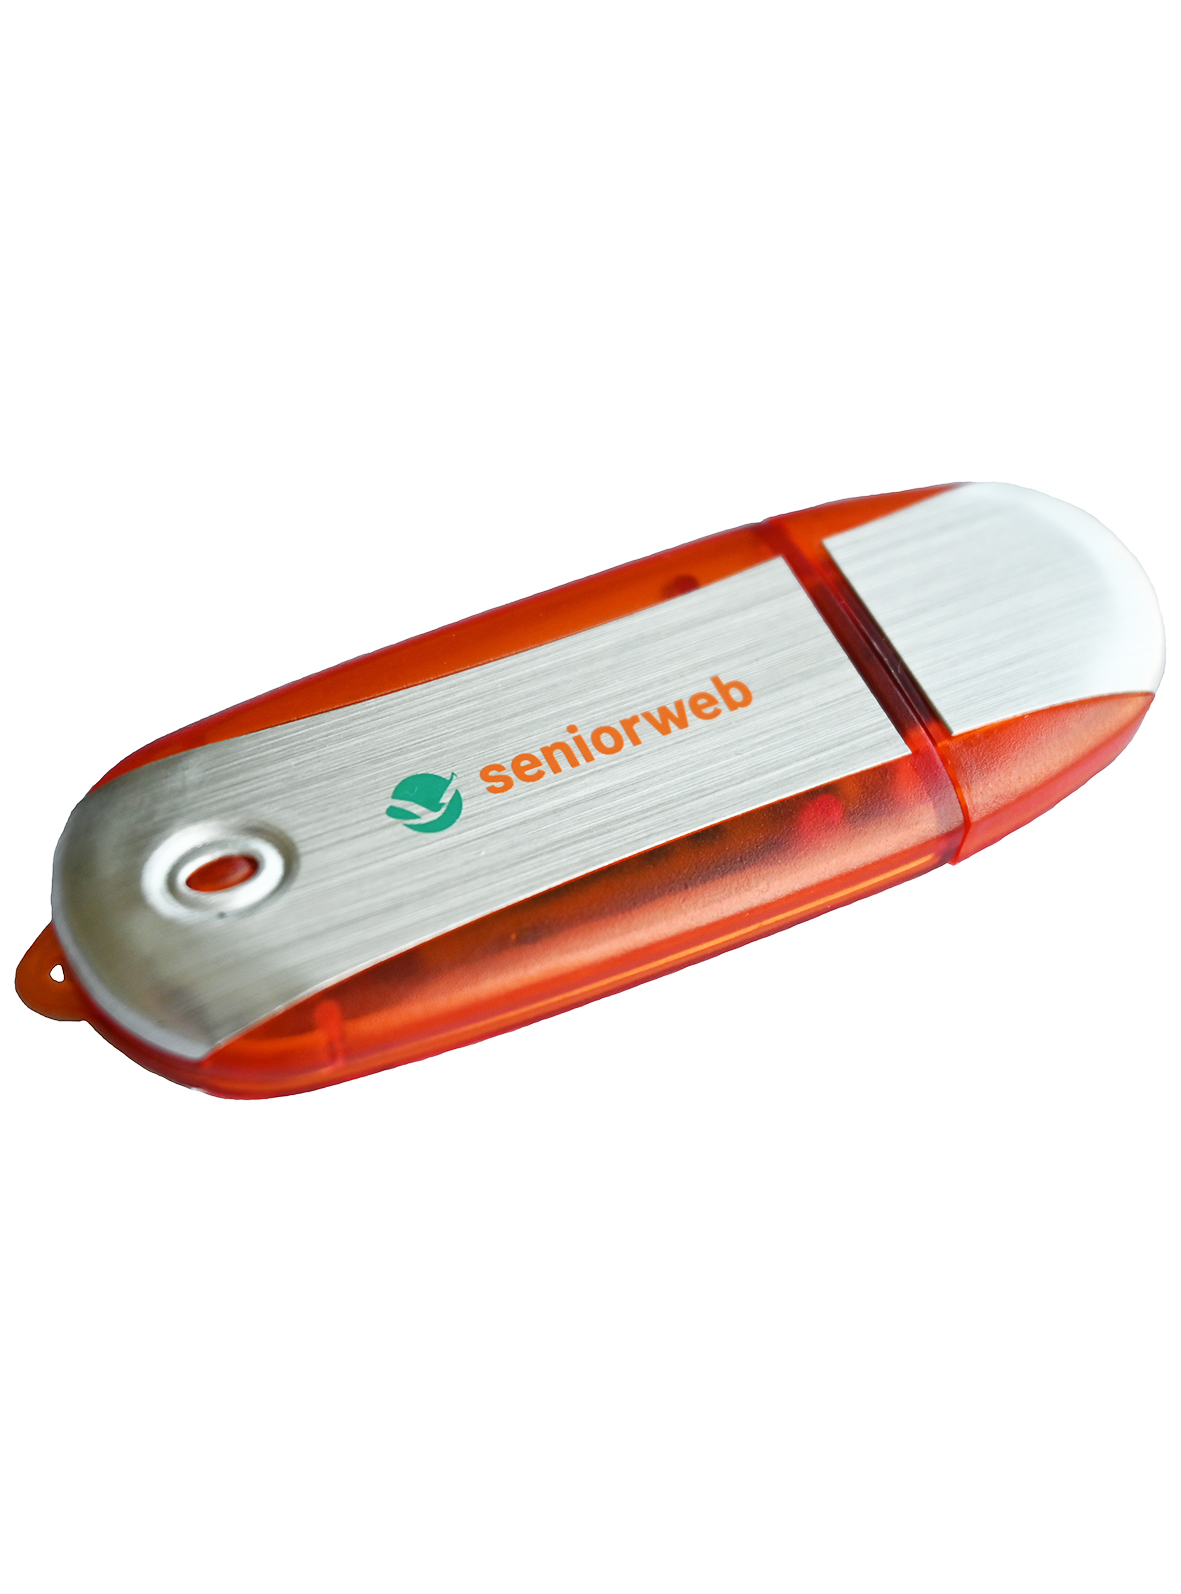 SeniorWeb Usb-stick 32 GB